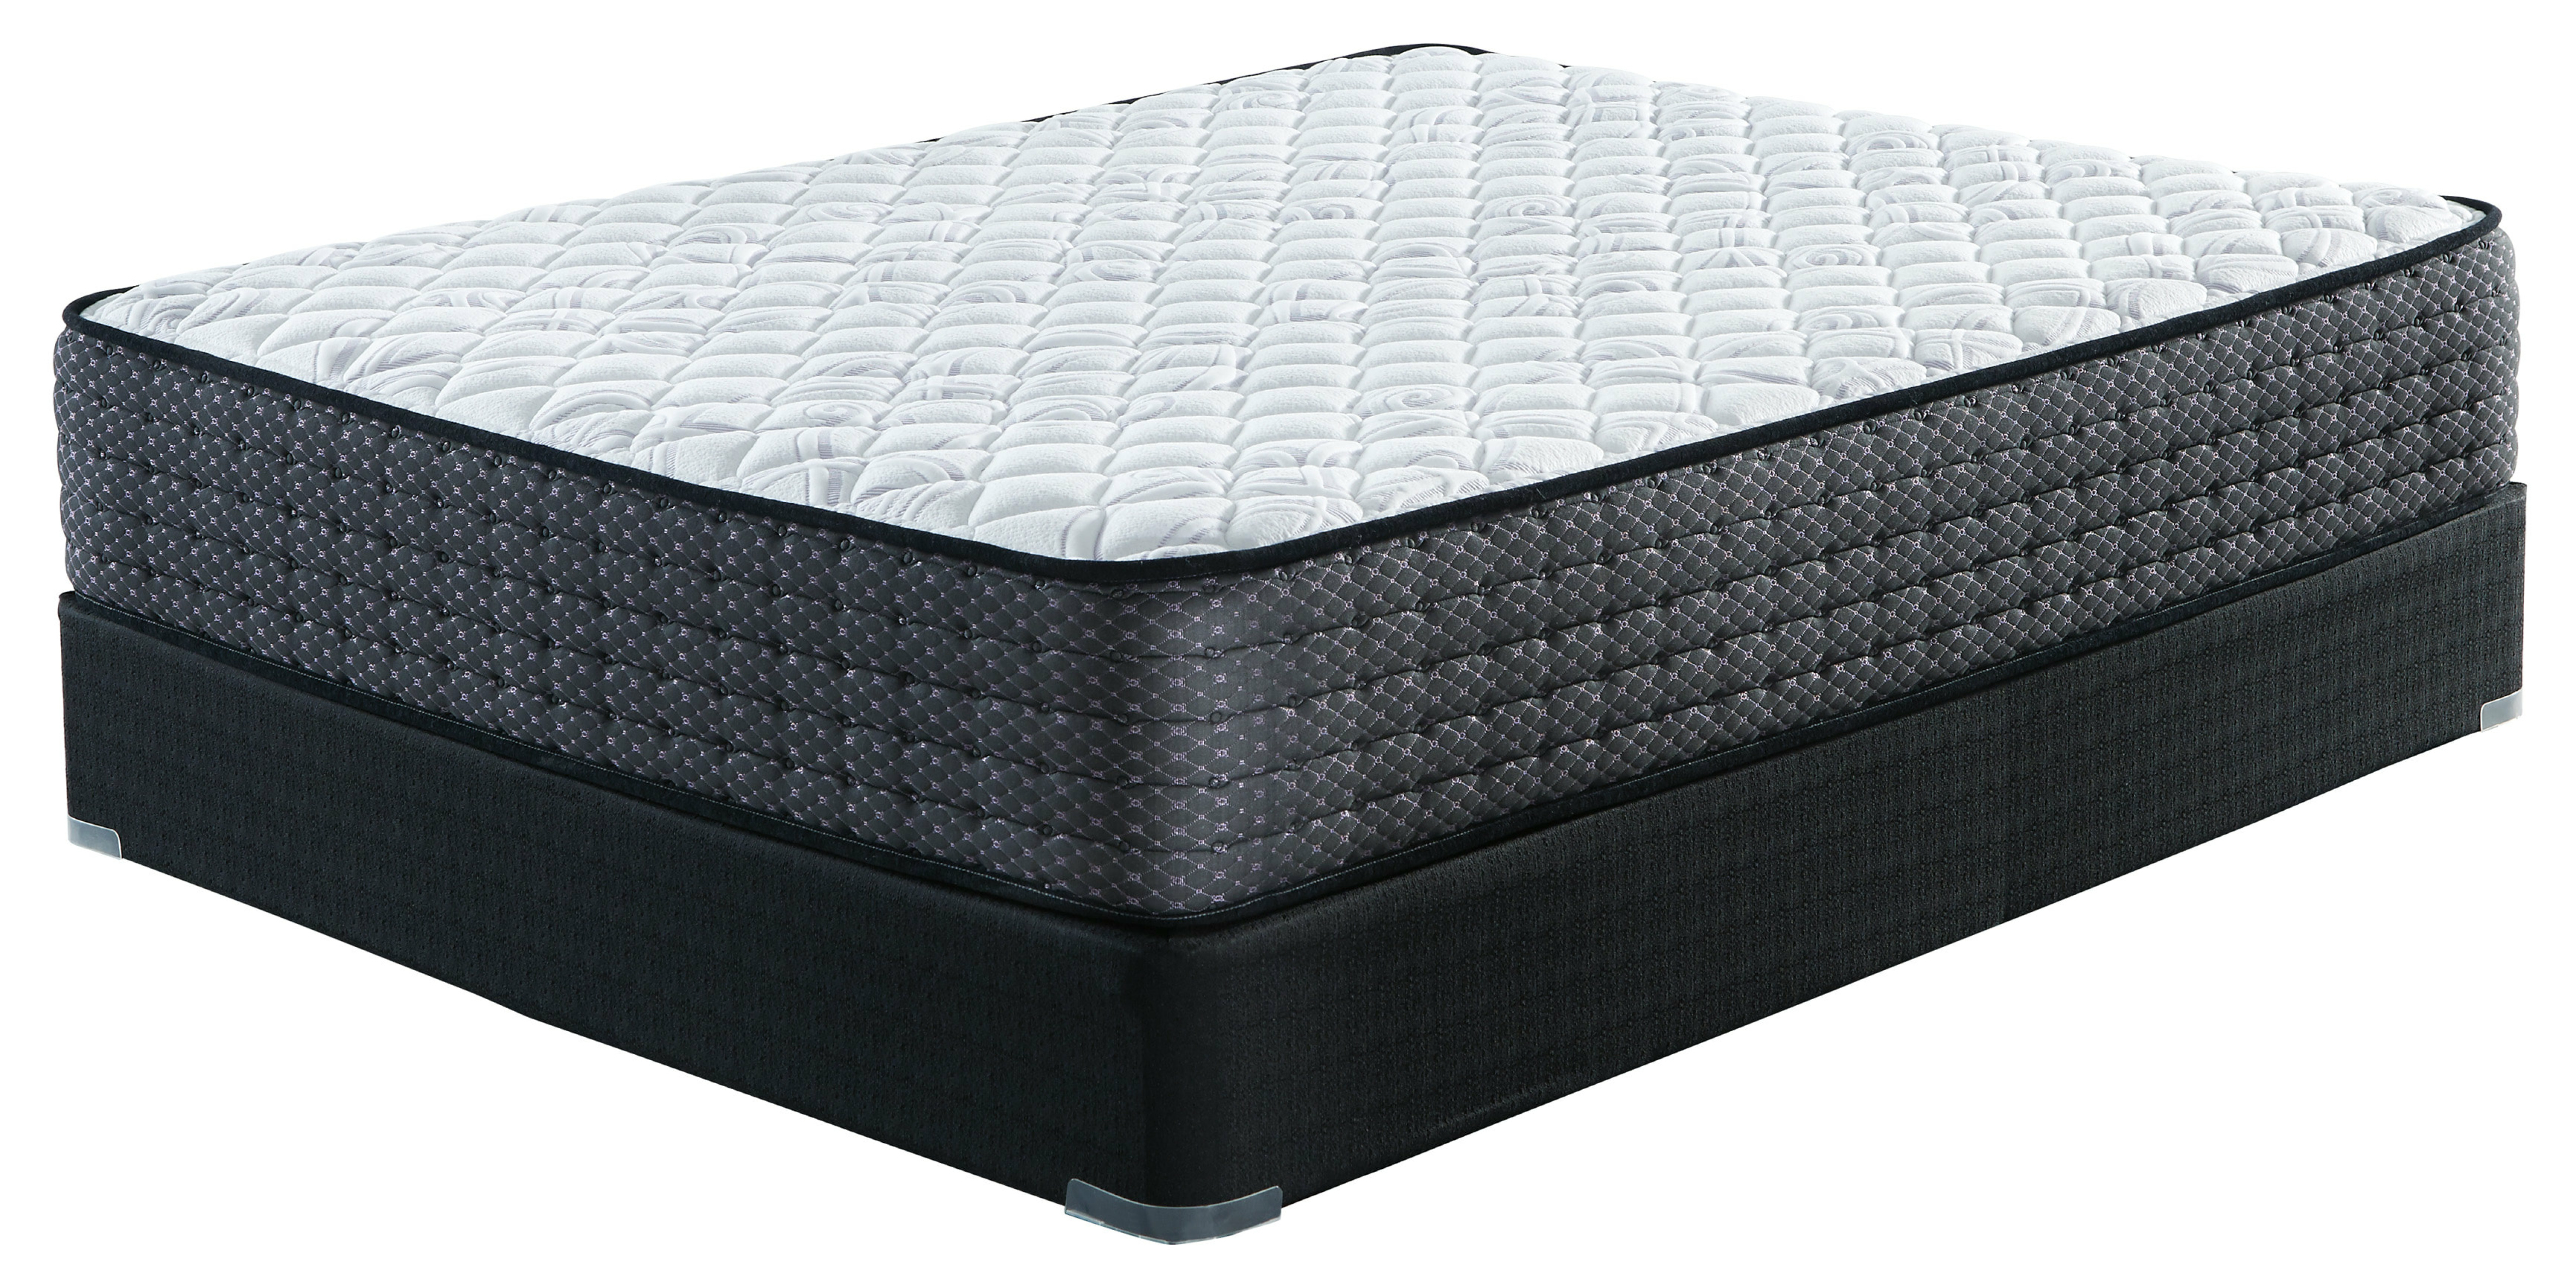 sierra sleep limited edition firm mattress